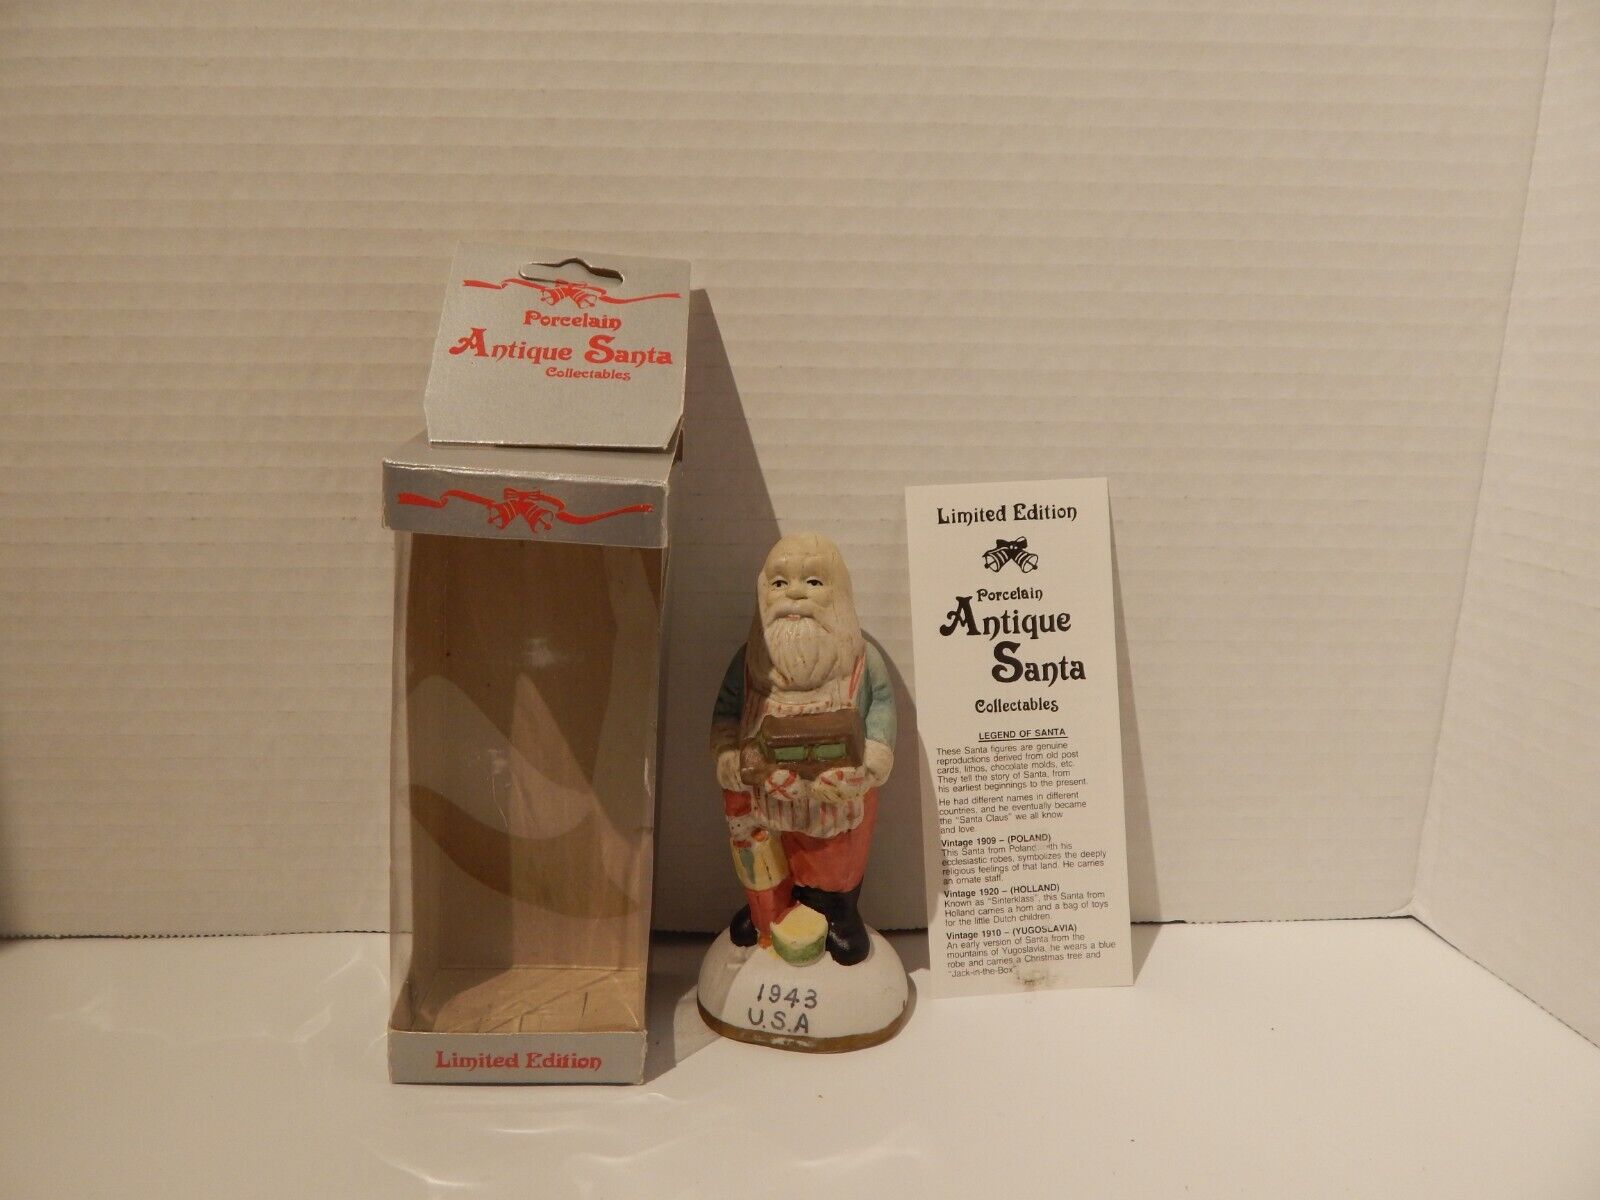 Santa Claus 1943 USA Small Figurine. Vintage 